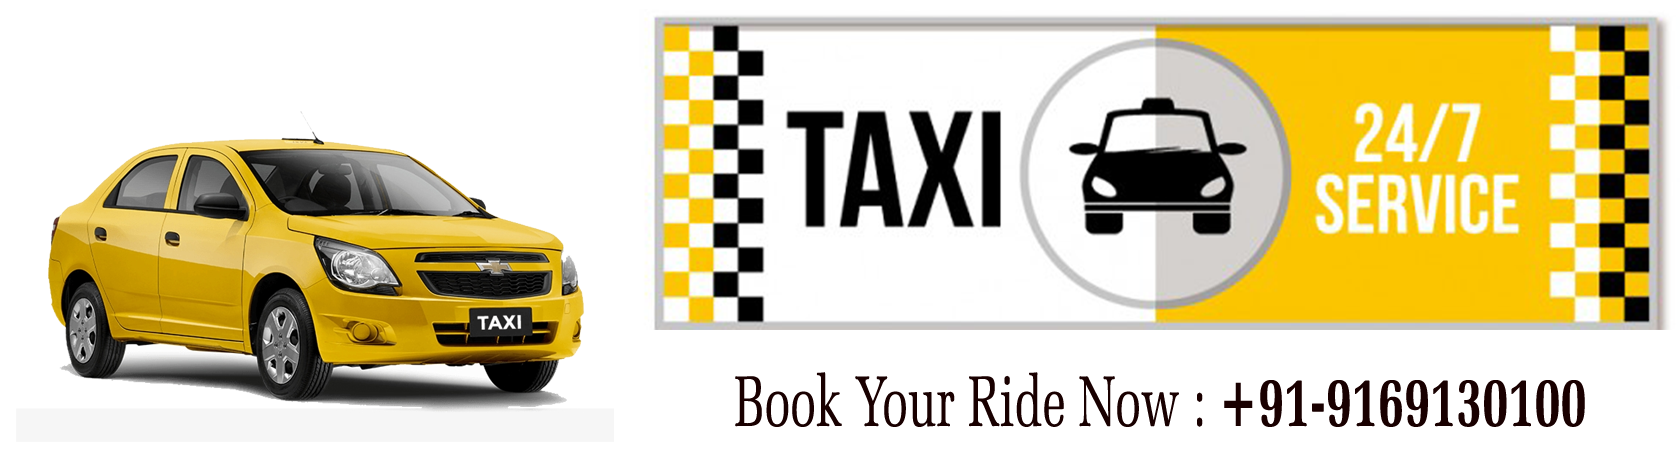 Taxi service | Taxi service in jalandhar